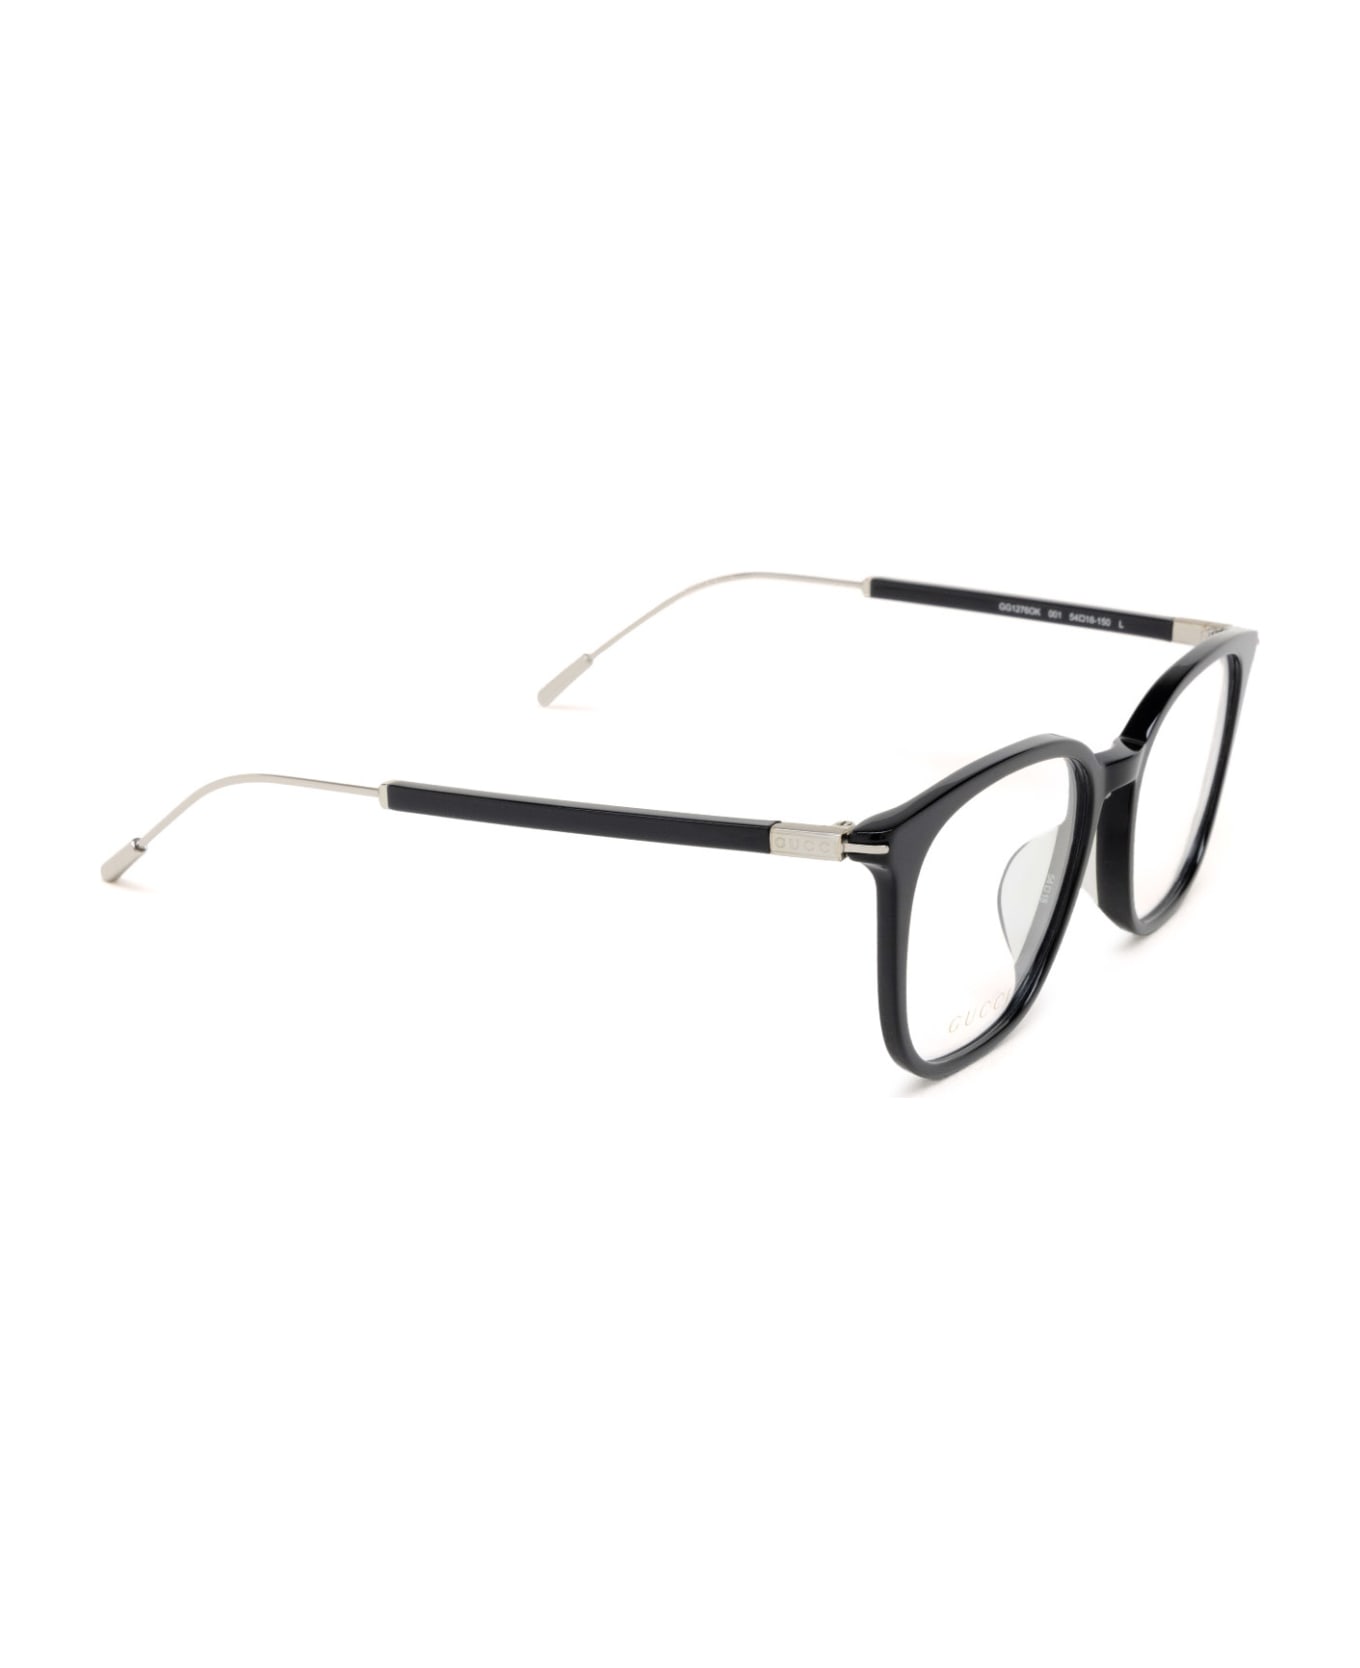 Gucci Eyewear Gg1276ok Black Glasses - Black